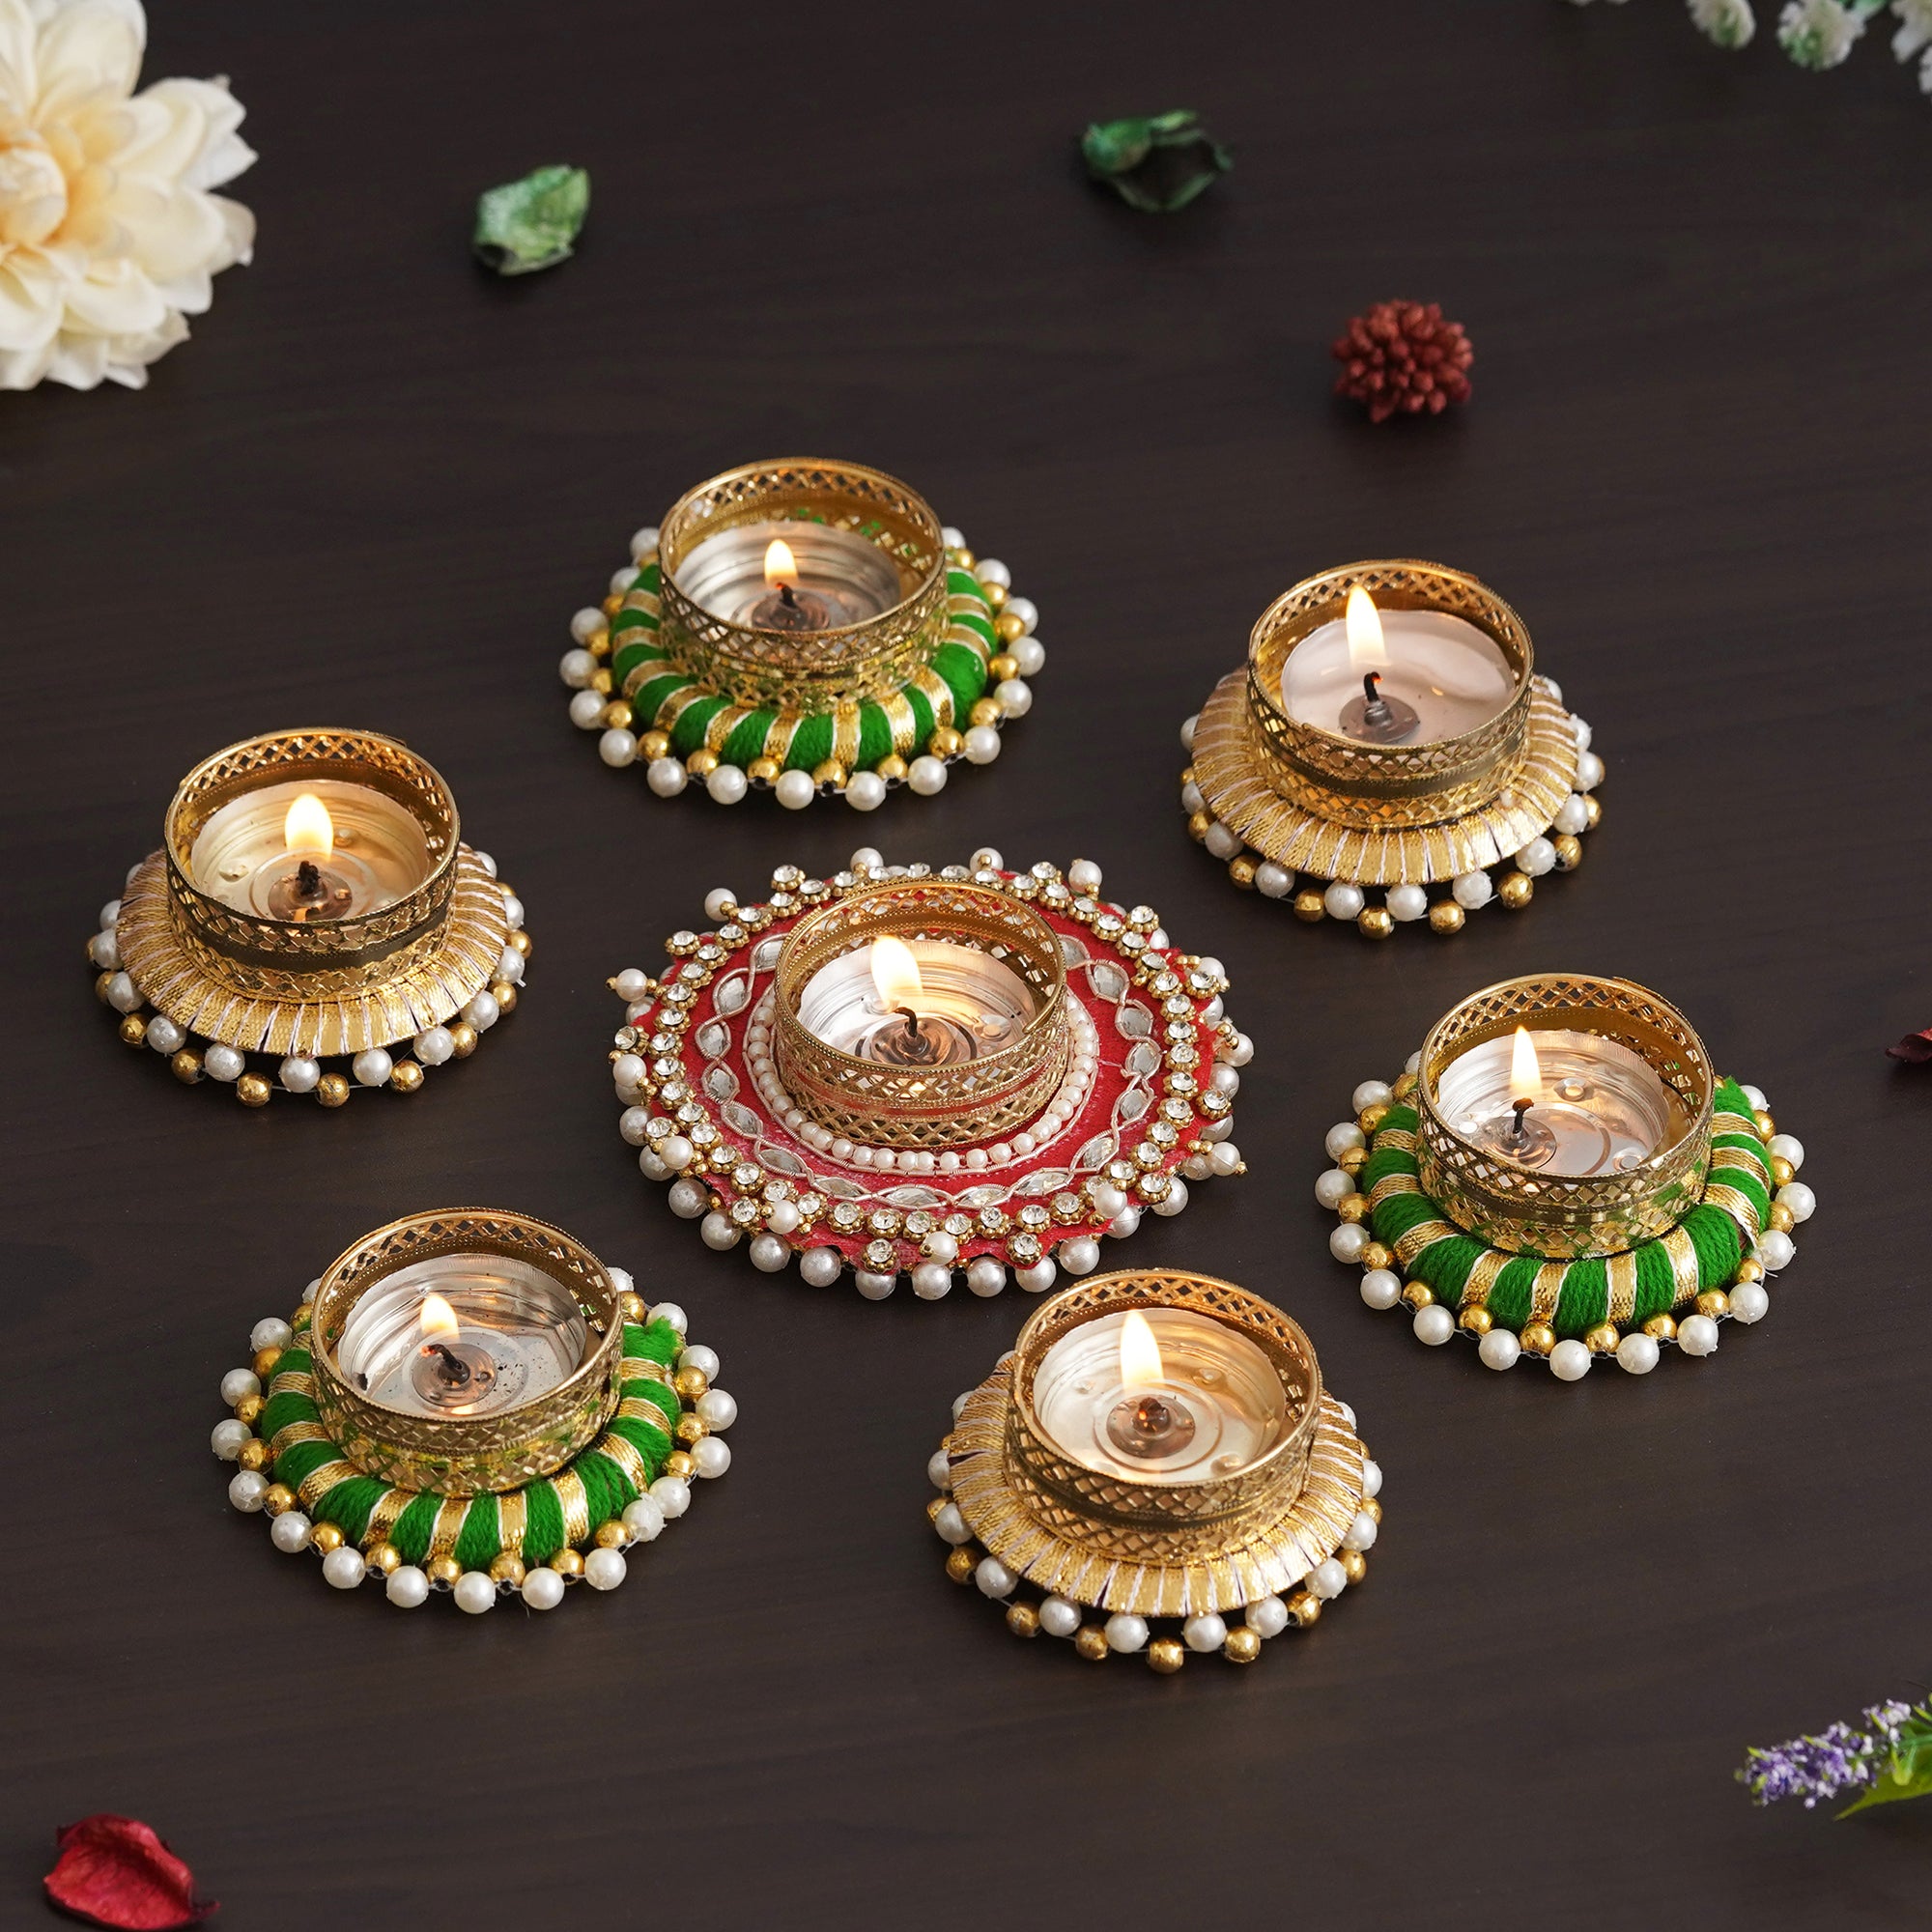 eCraftIndia Set of 7 Round Shaped Diamond Beads and Pearls Decorative Tea Light Candle Holders